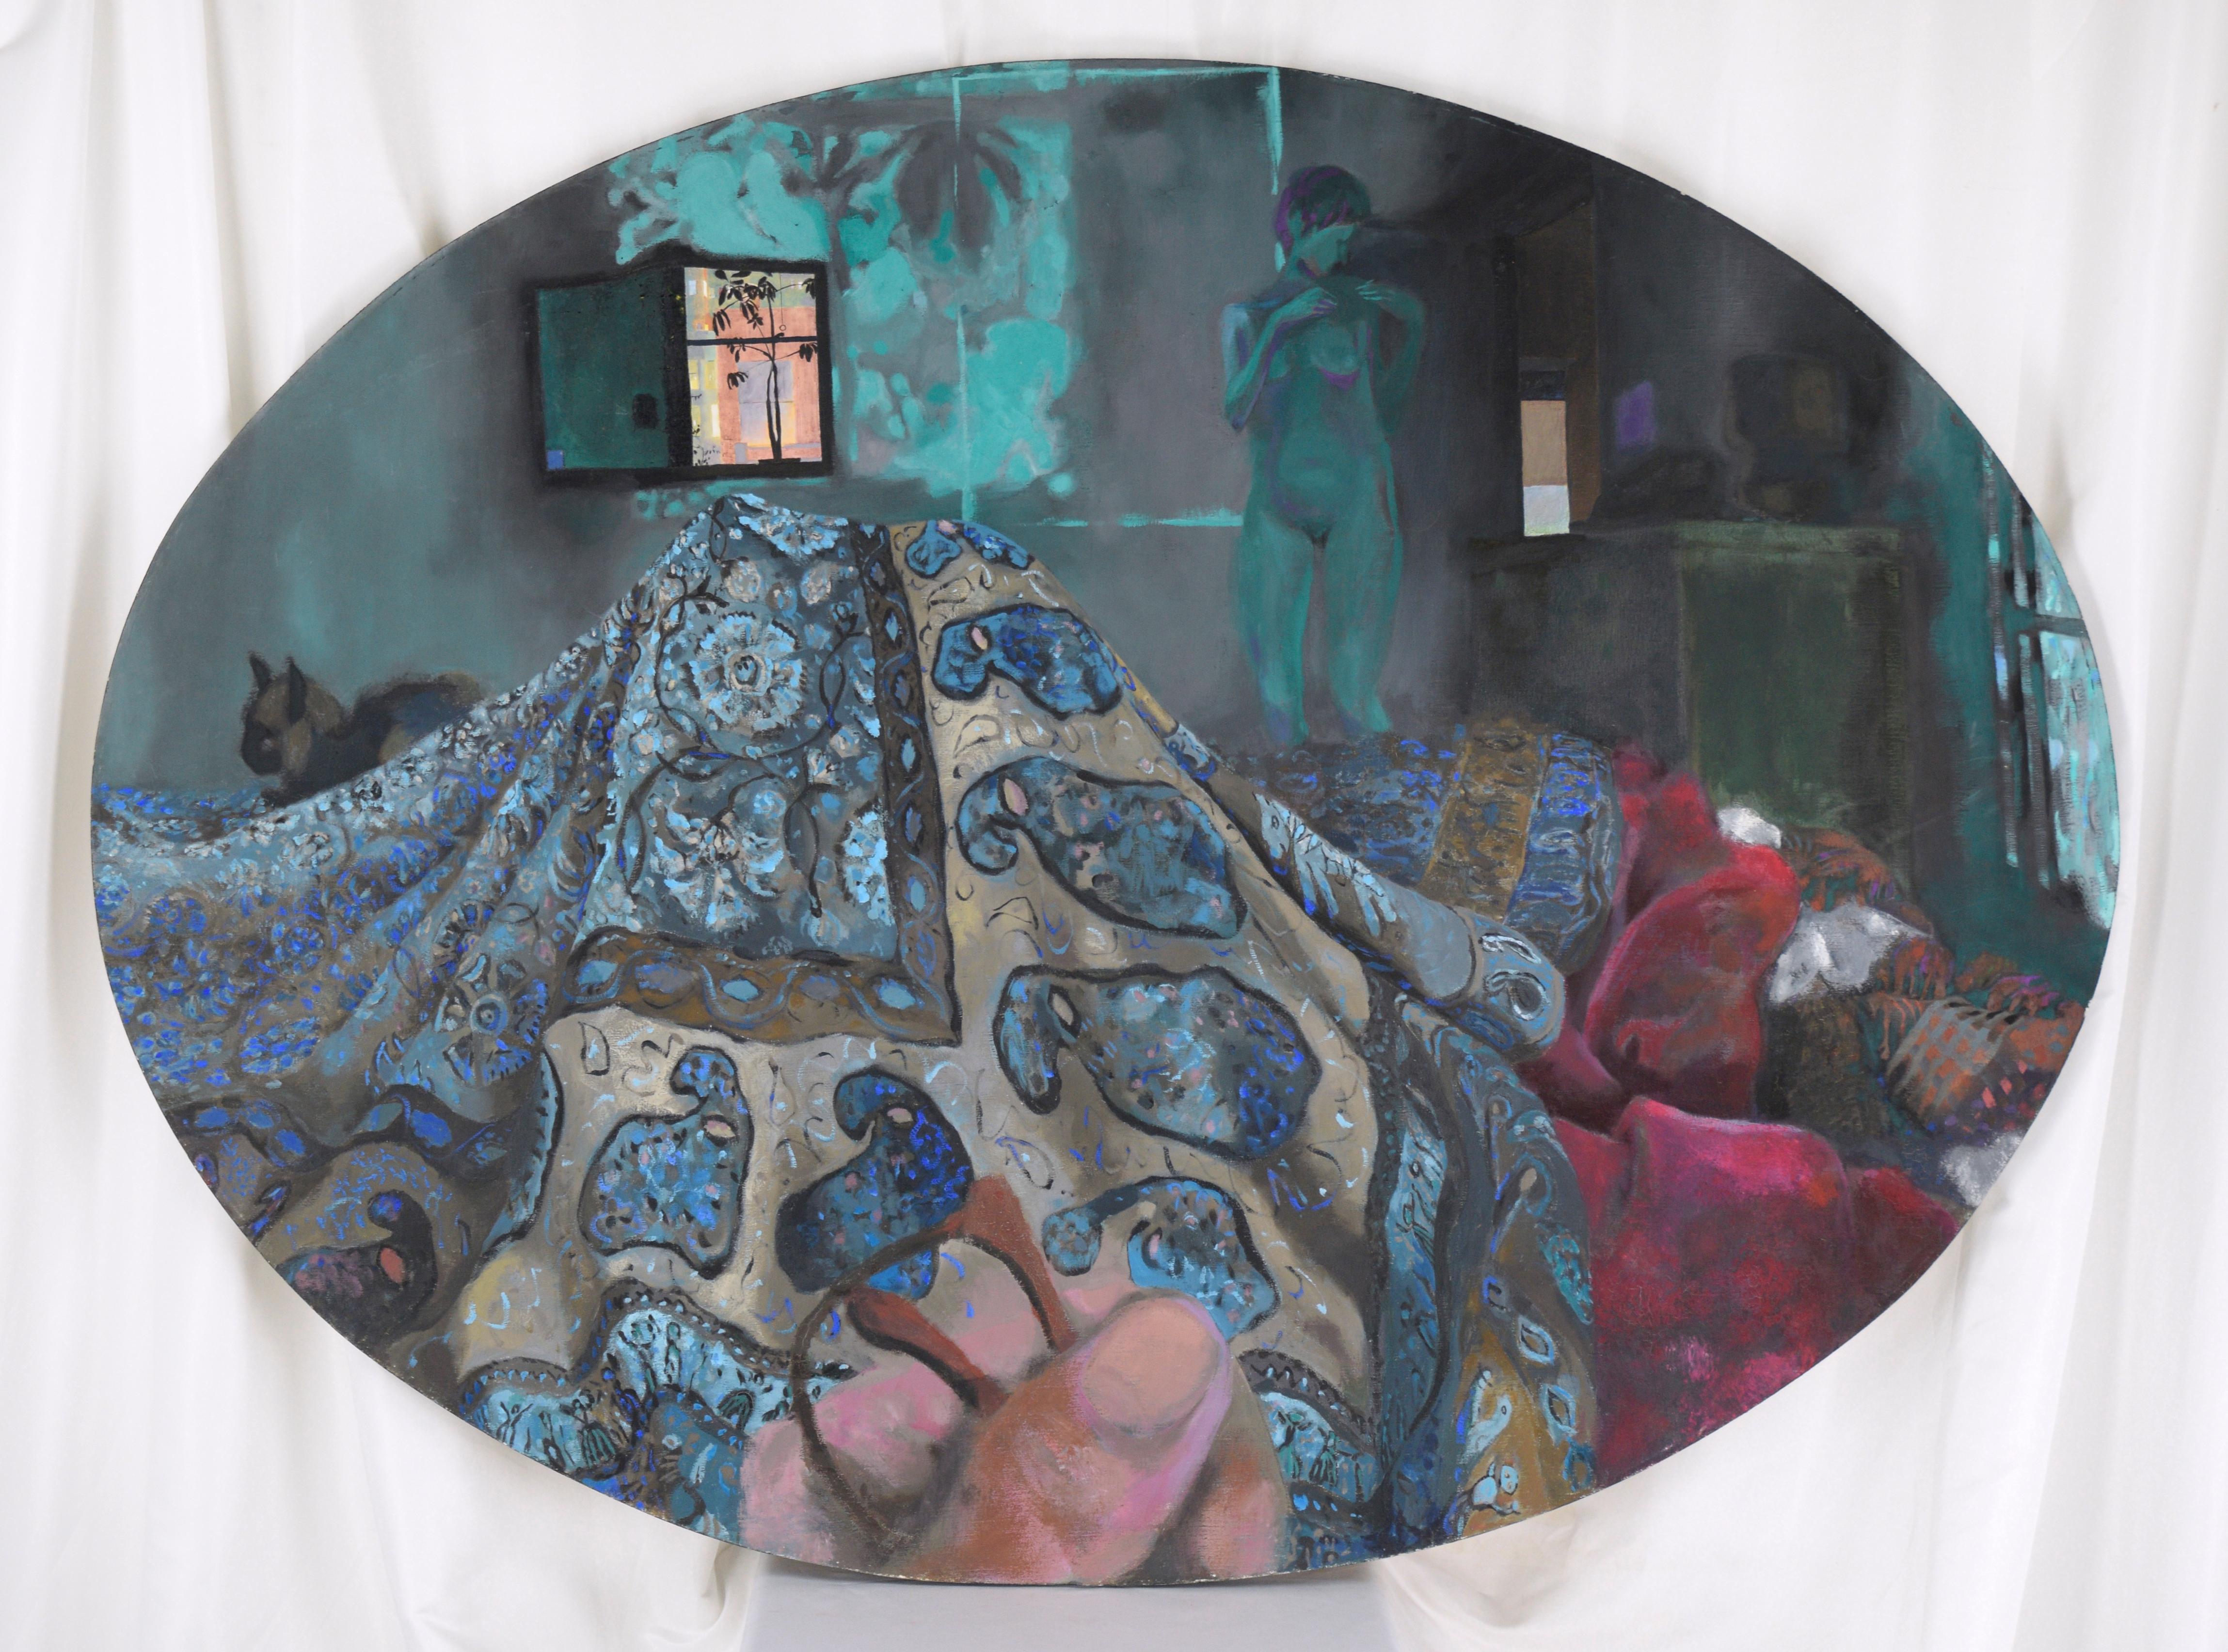 Narcissus Robert Quagliata Interior Painting - "Are You Sleepy Tonight?" Interior with Nude